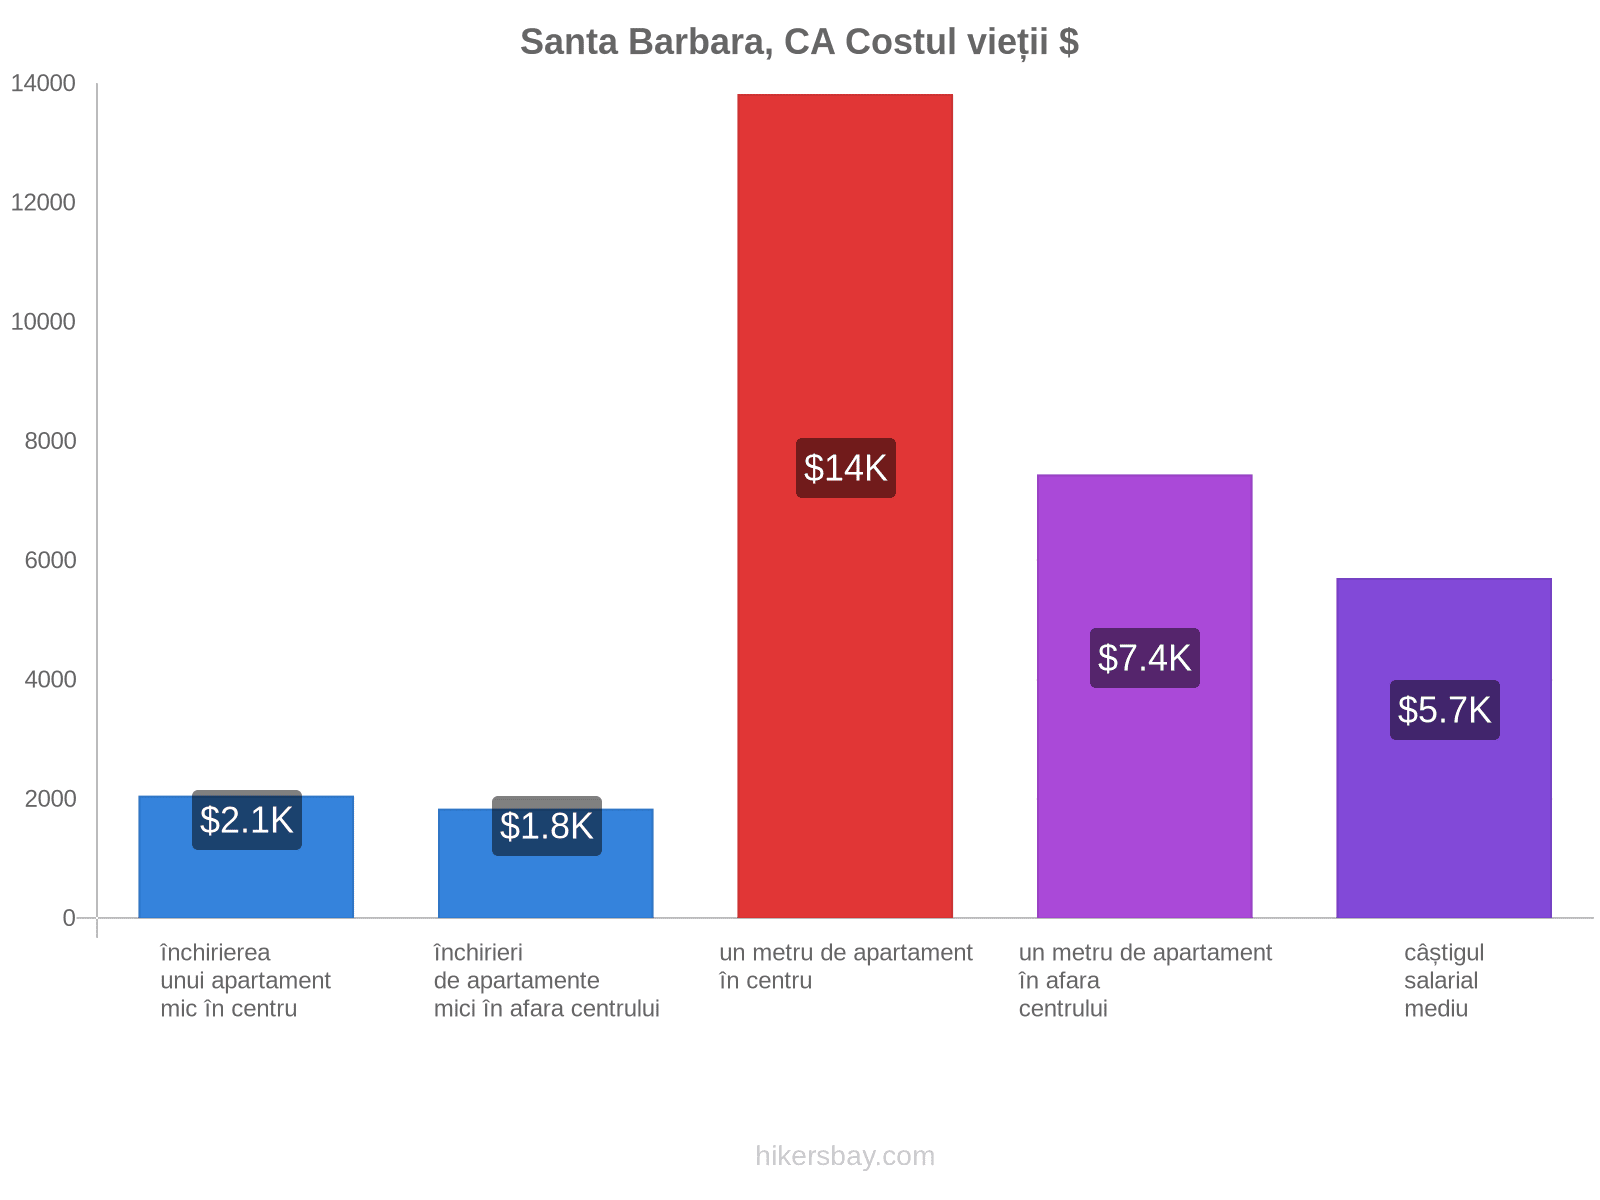 Santa Barbara, CA costul vieții hikersbay.com